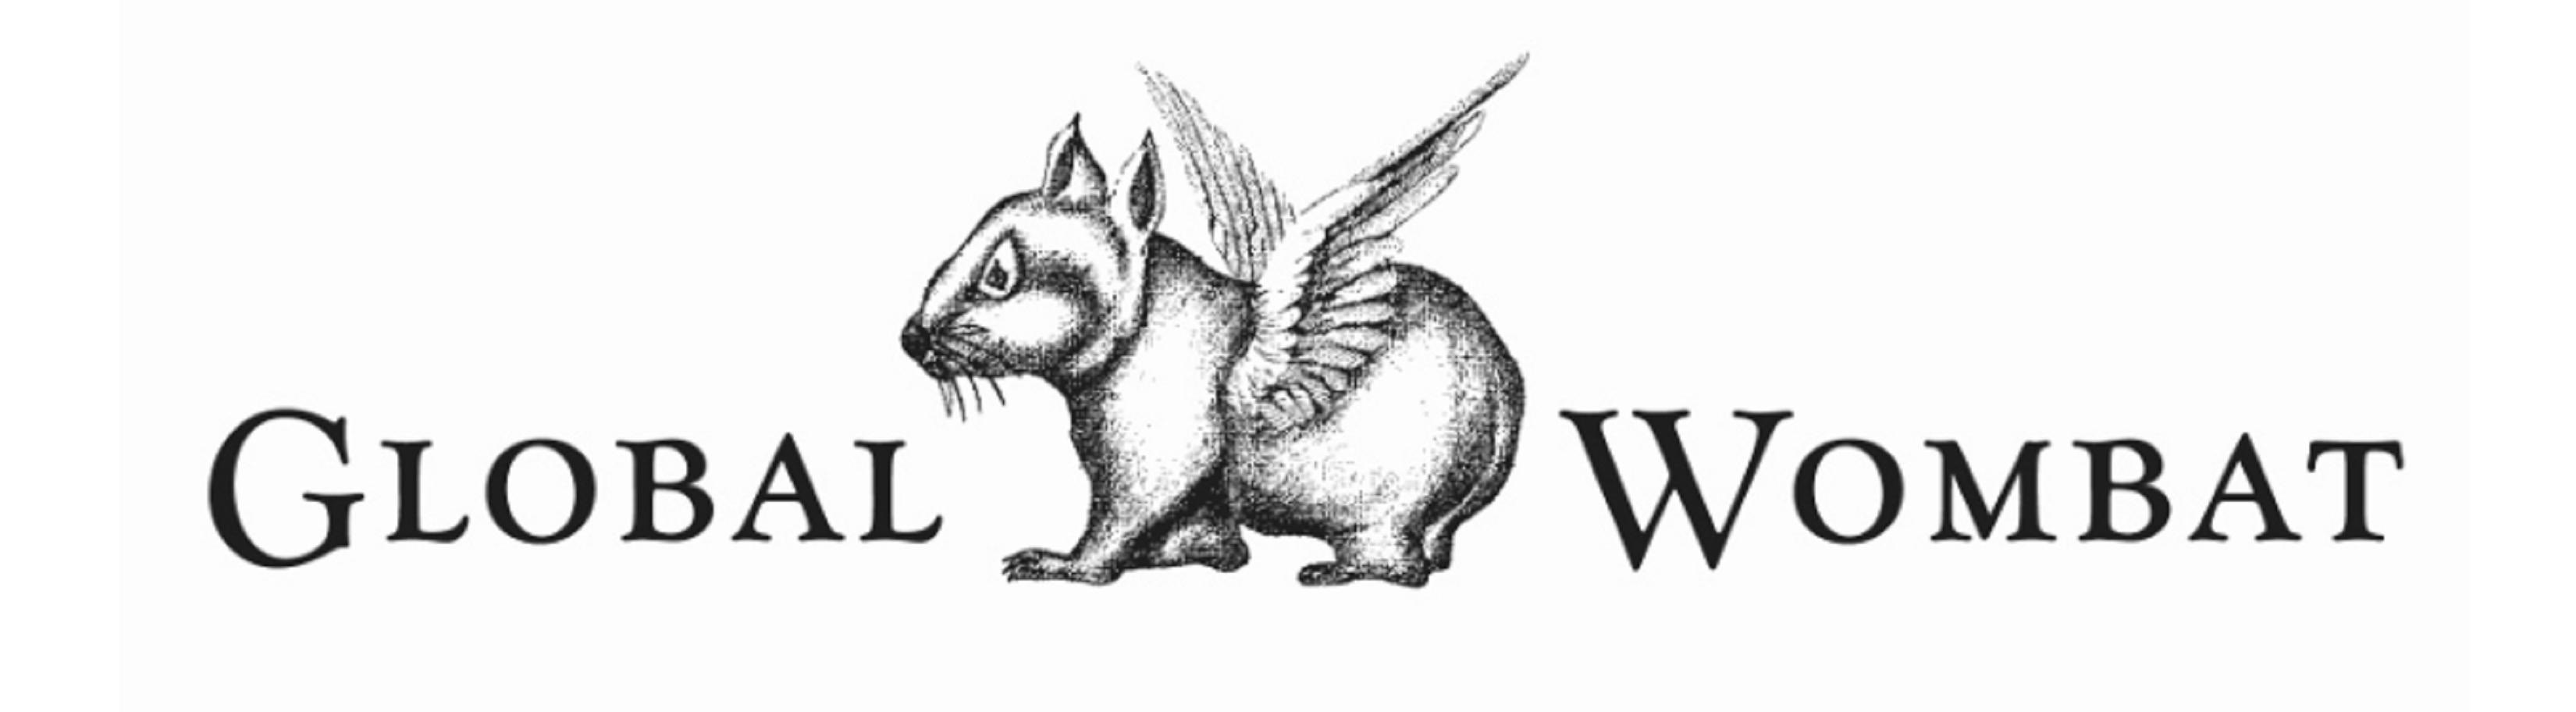 Global Wombat Logo copy